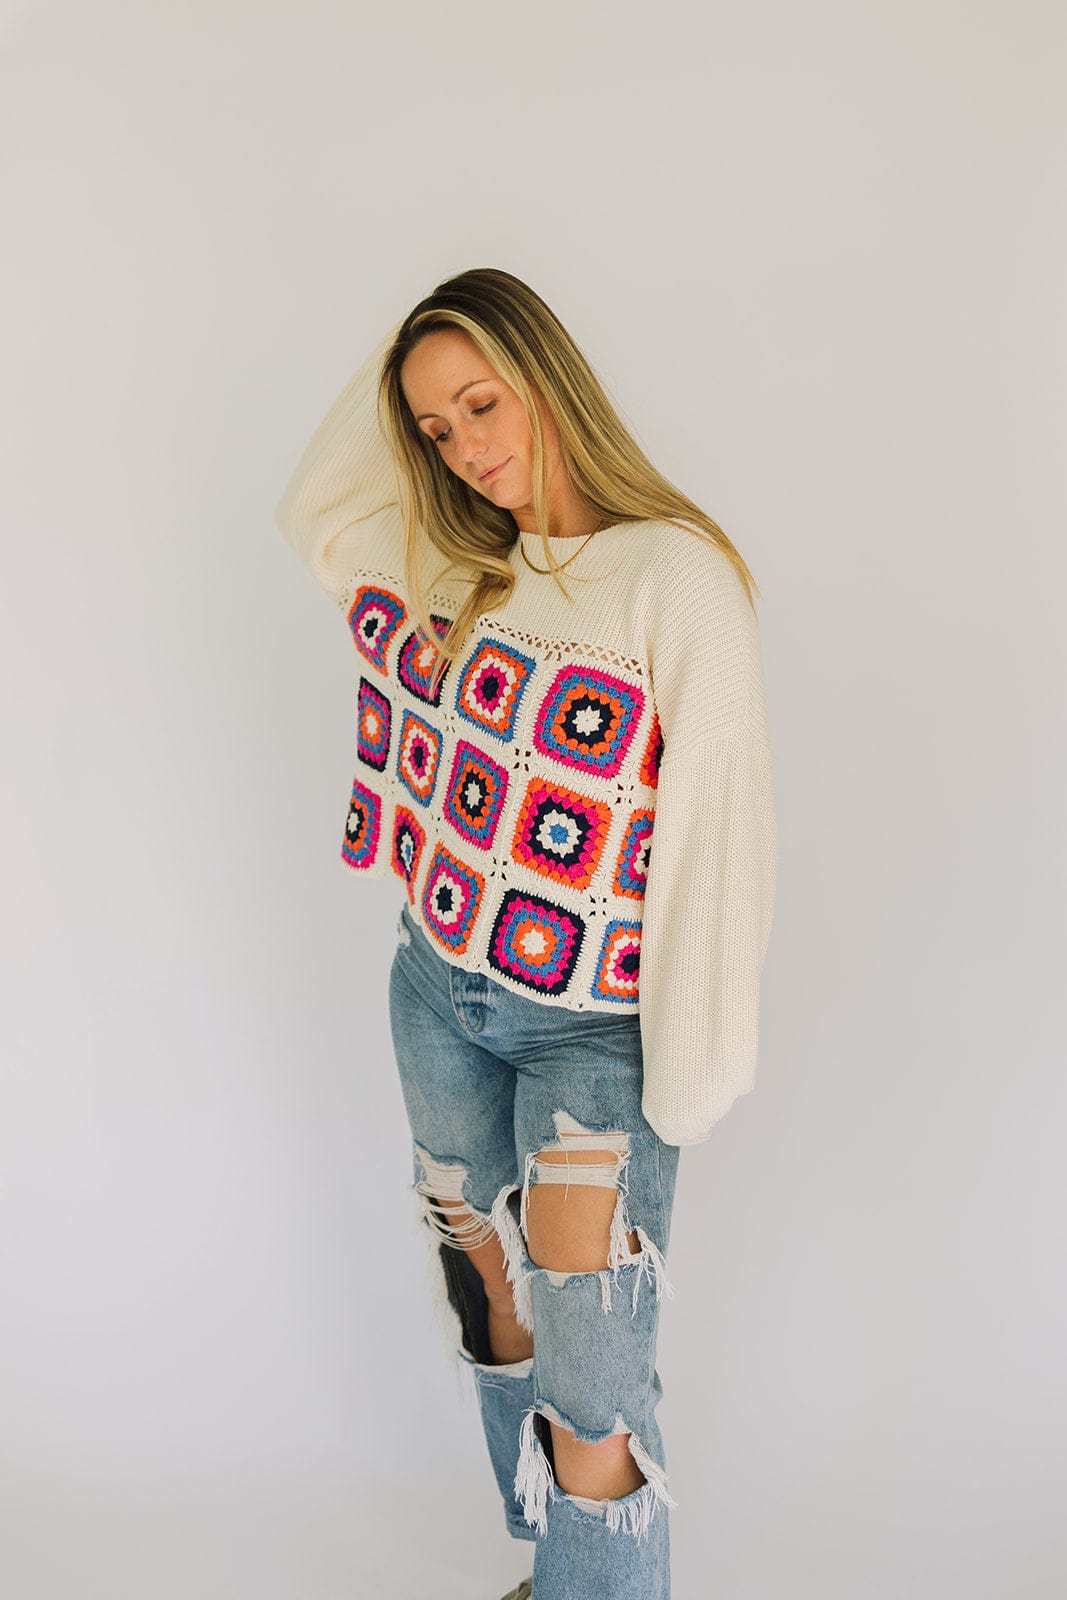 Color Pop Crochet Sweater